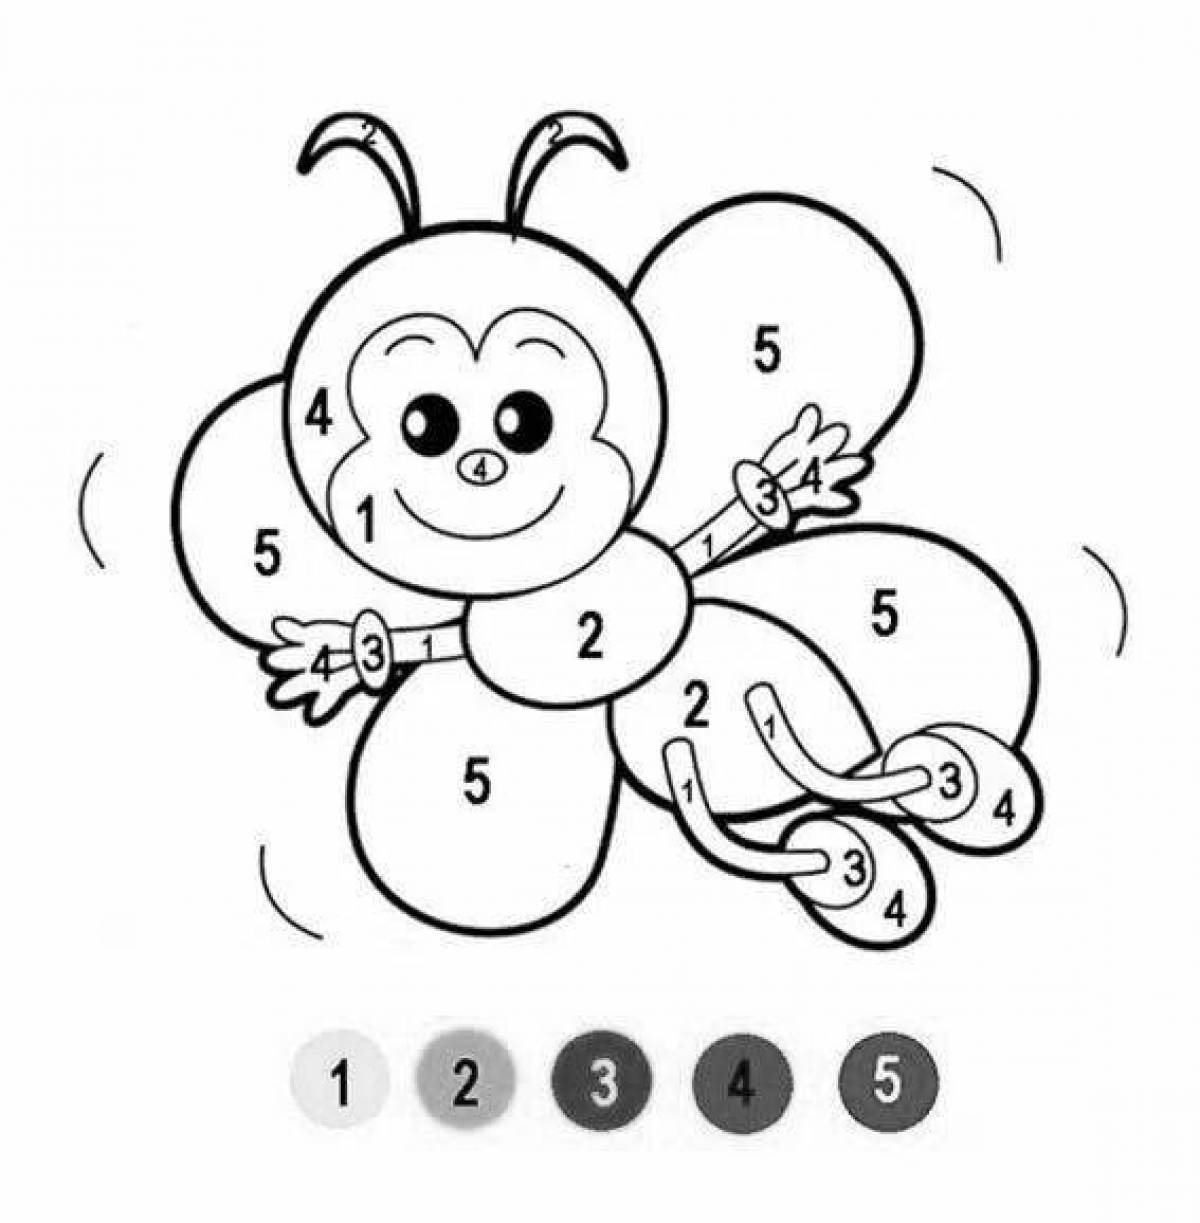 By numbers for preschoolers #12